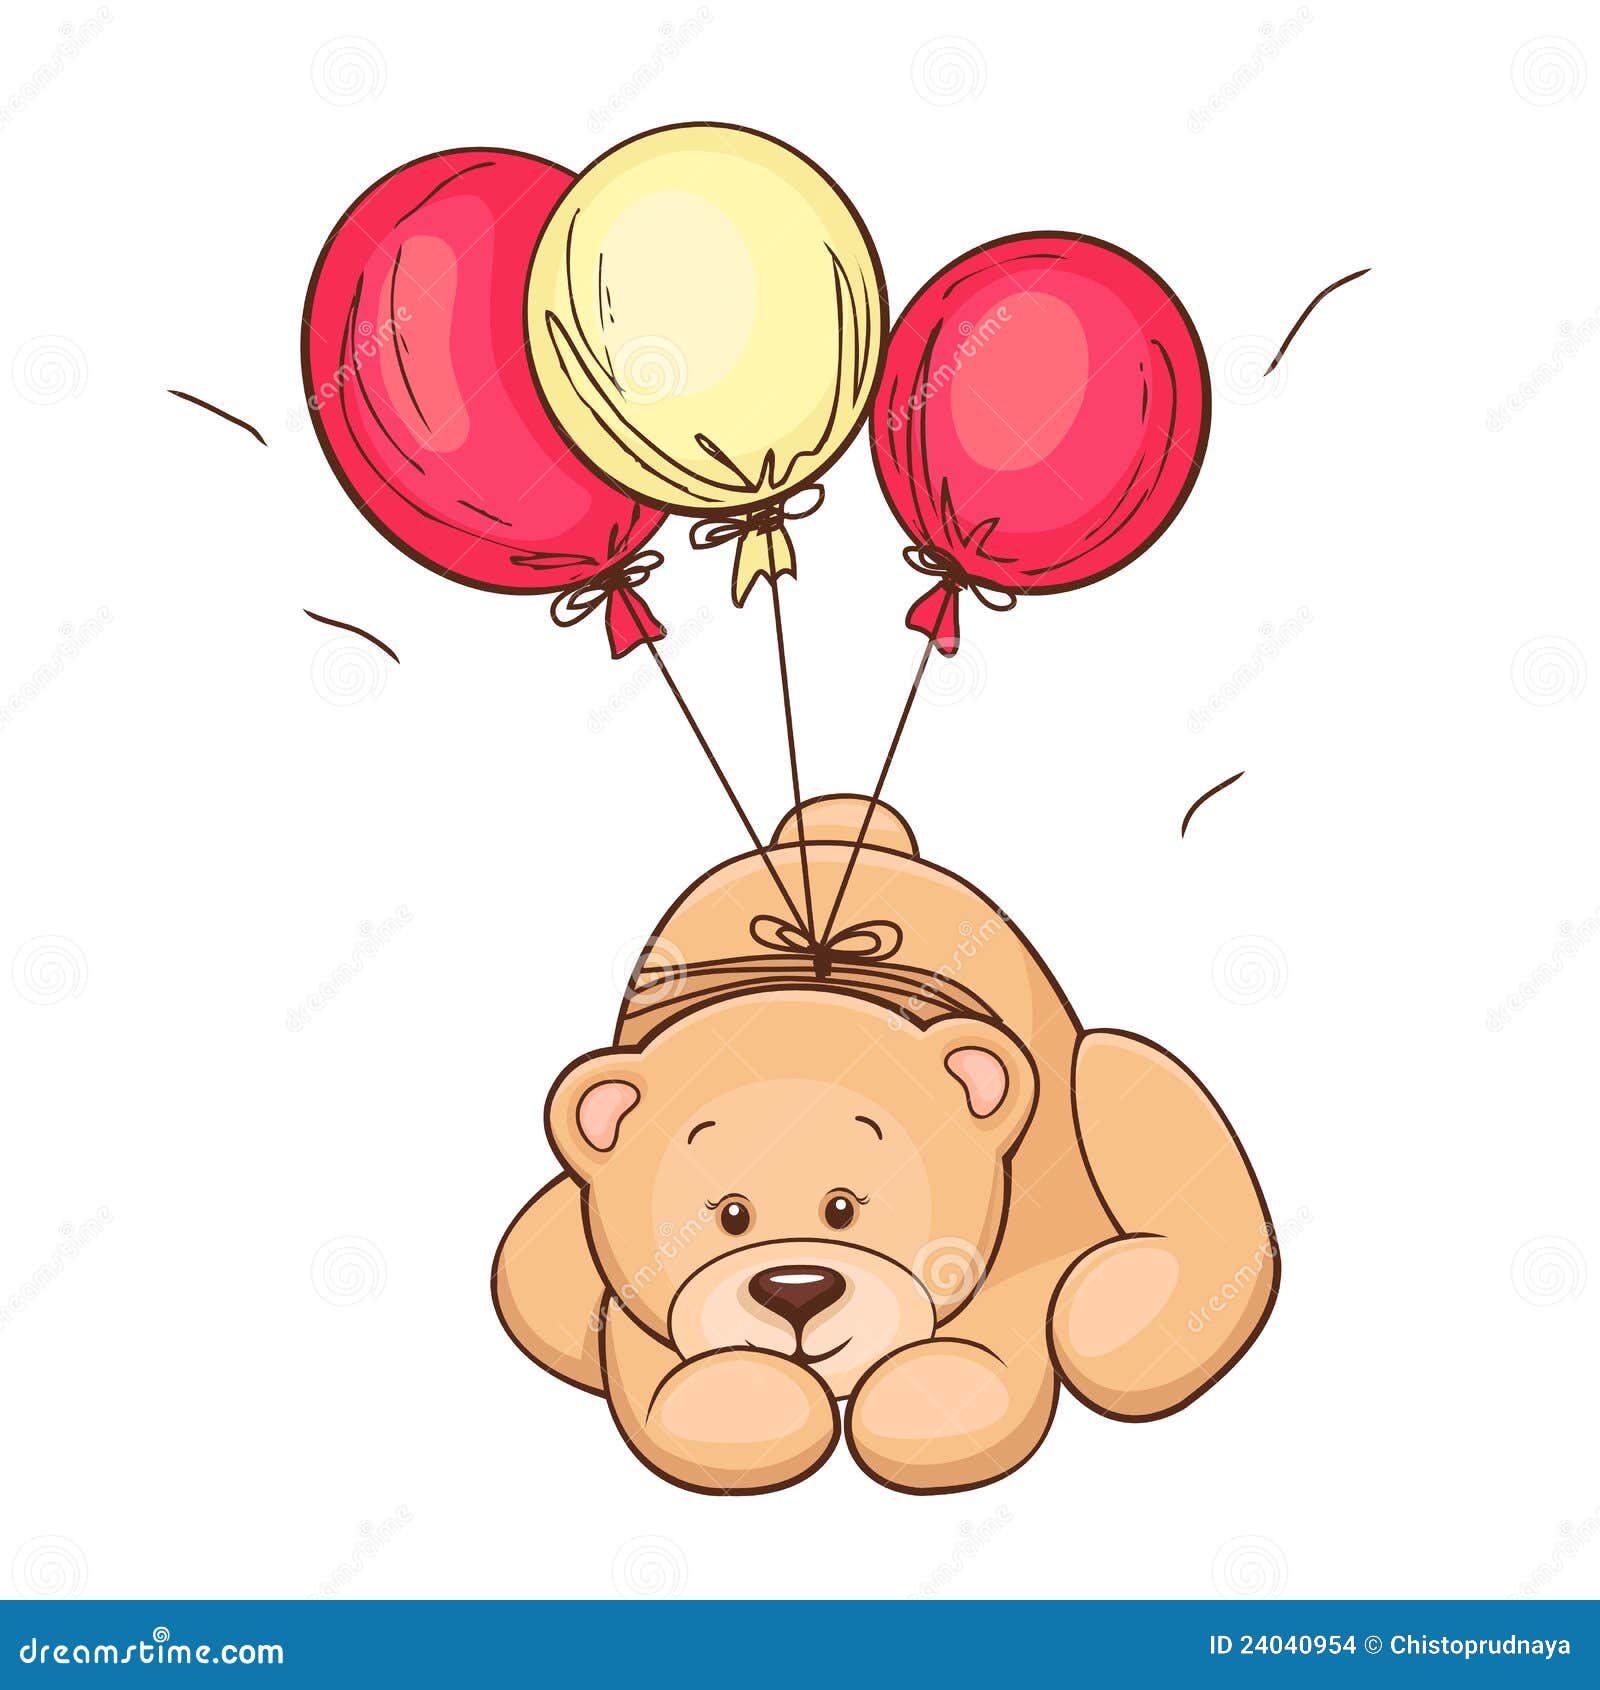 teddy bear with balloons clipart - photo #20